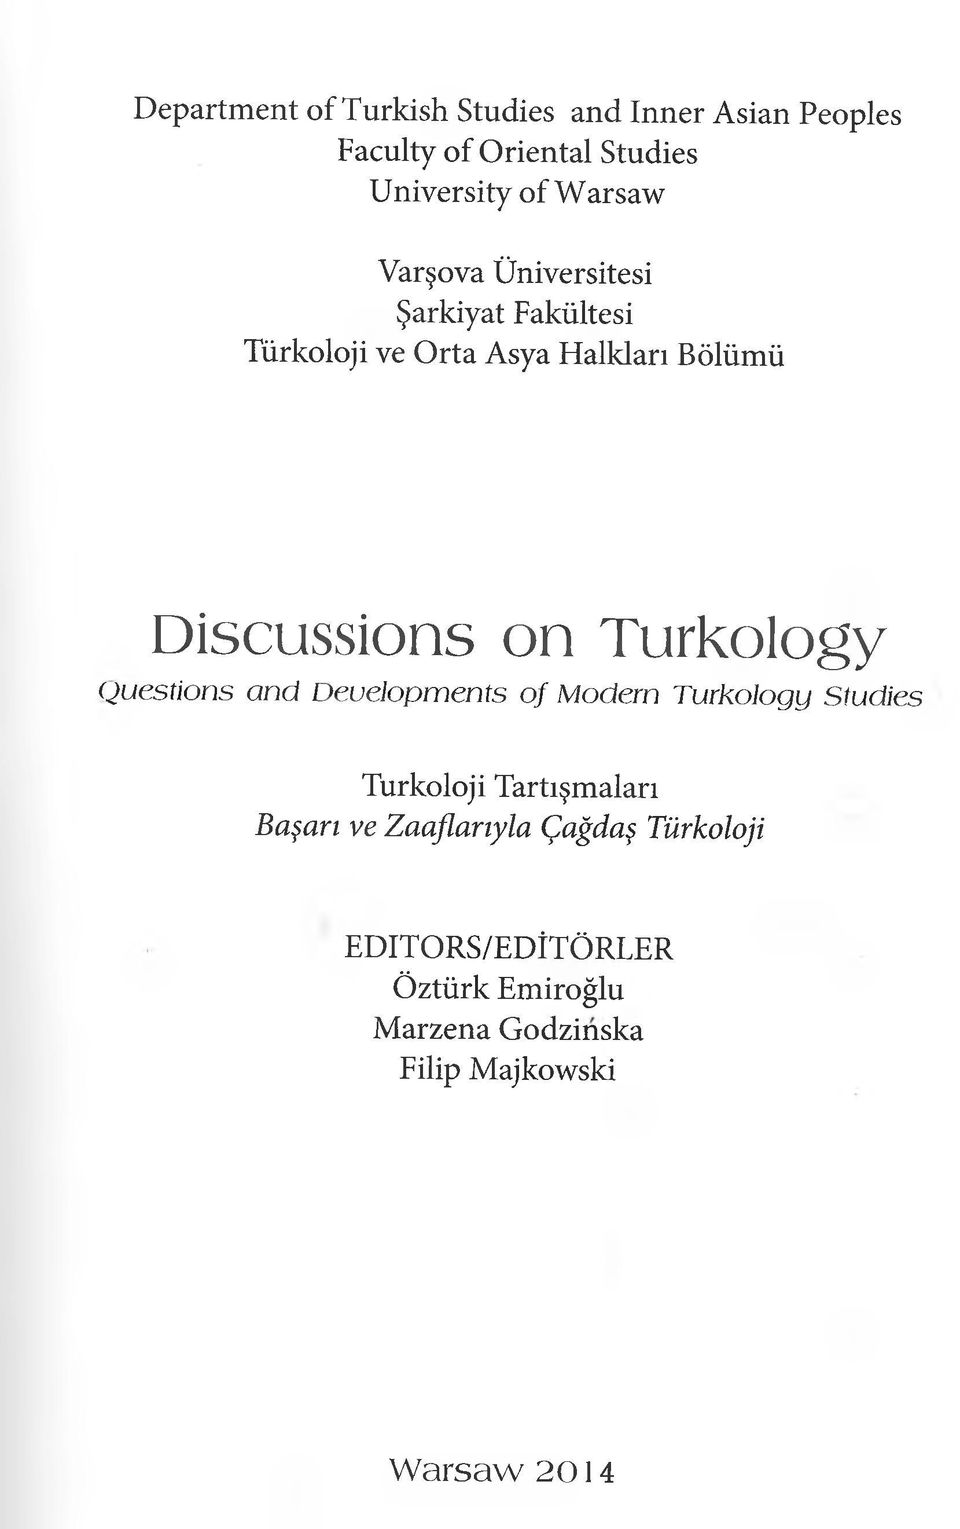 Turkology (Juestions and Deuelopments of Modern Turkology Studies Türkoloji Tartışmaları Başarı ve